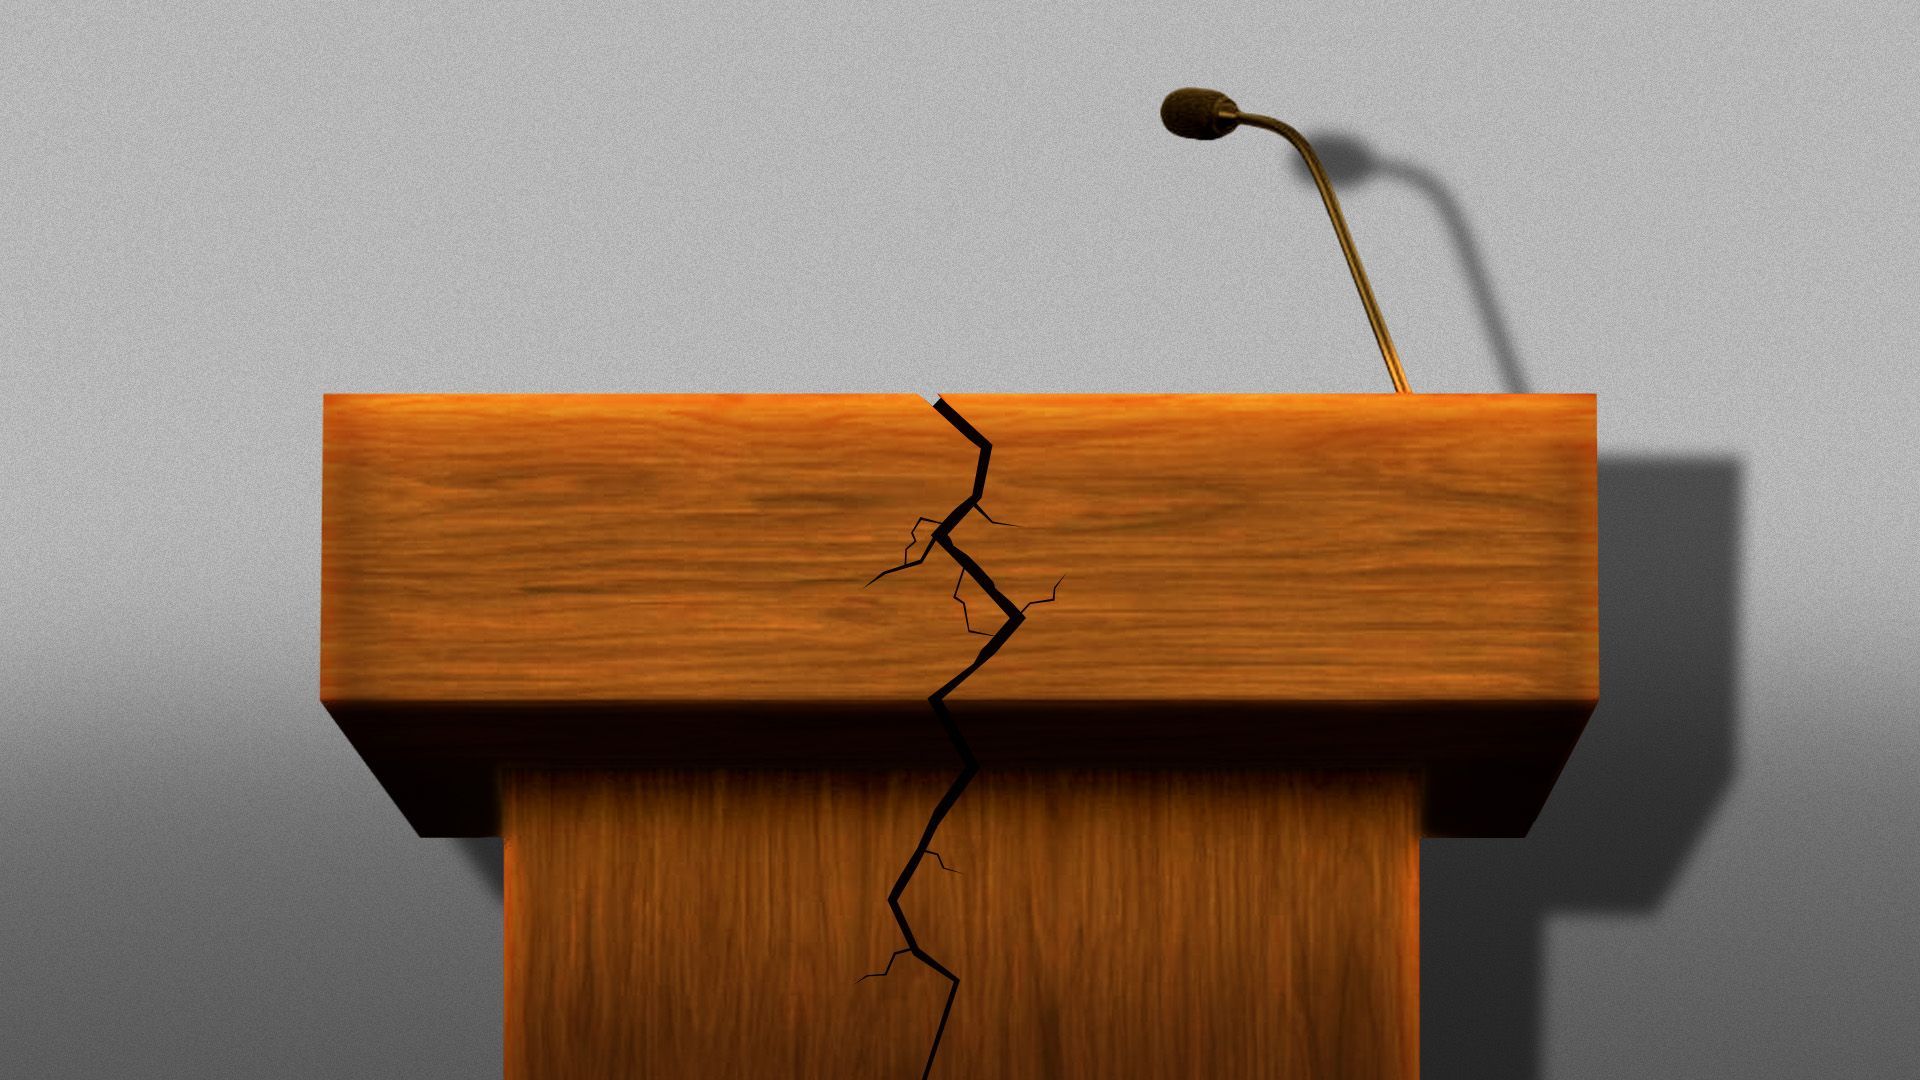 Illustration of a cracked city hall podium